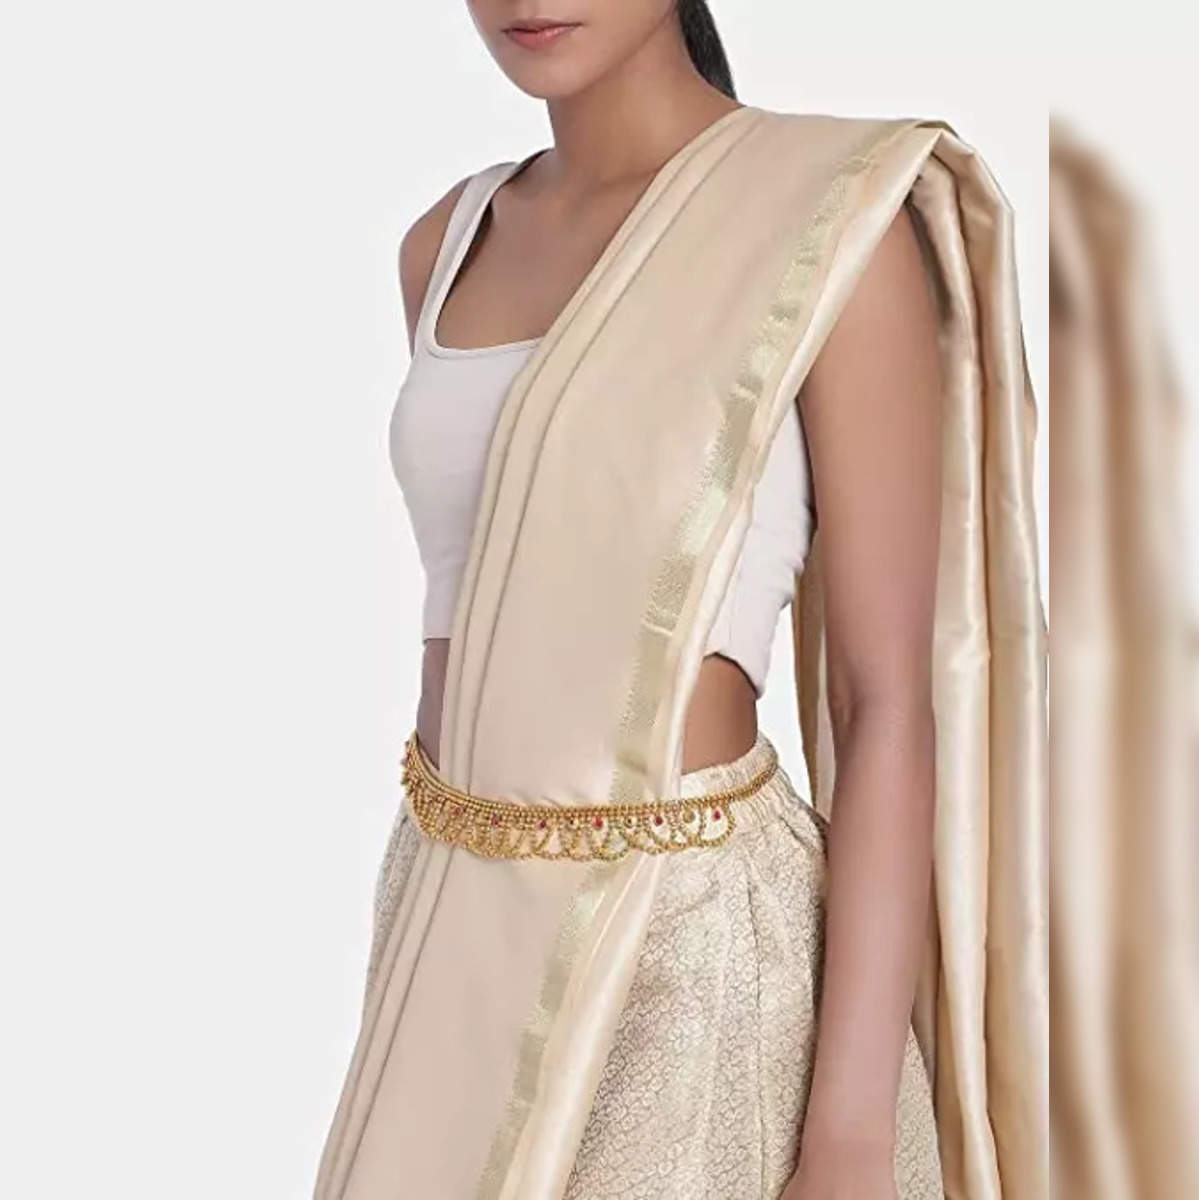 Stunning Belt Saree for a Glamorous Look